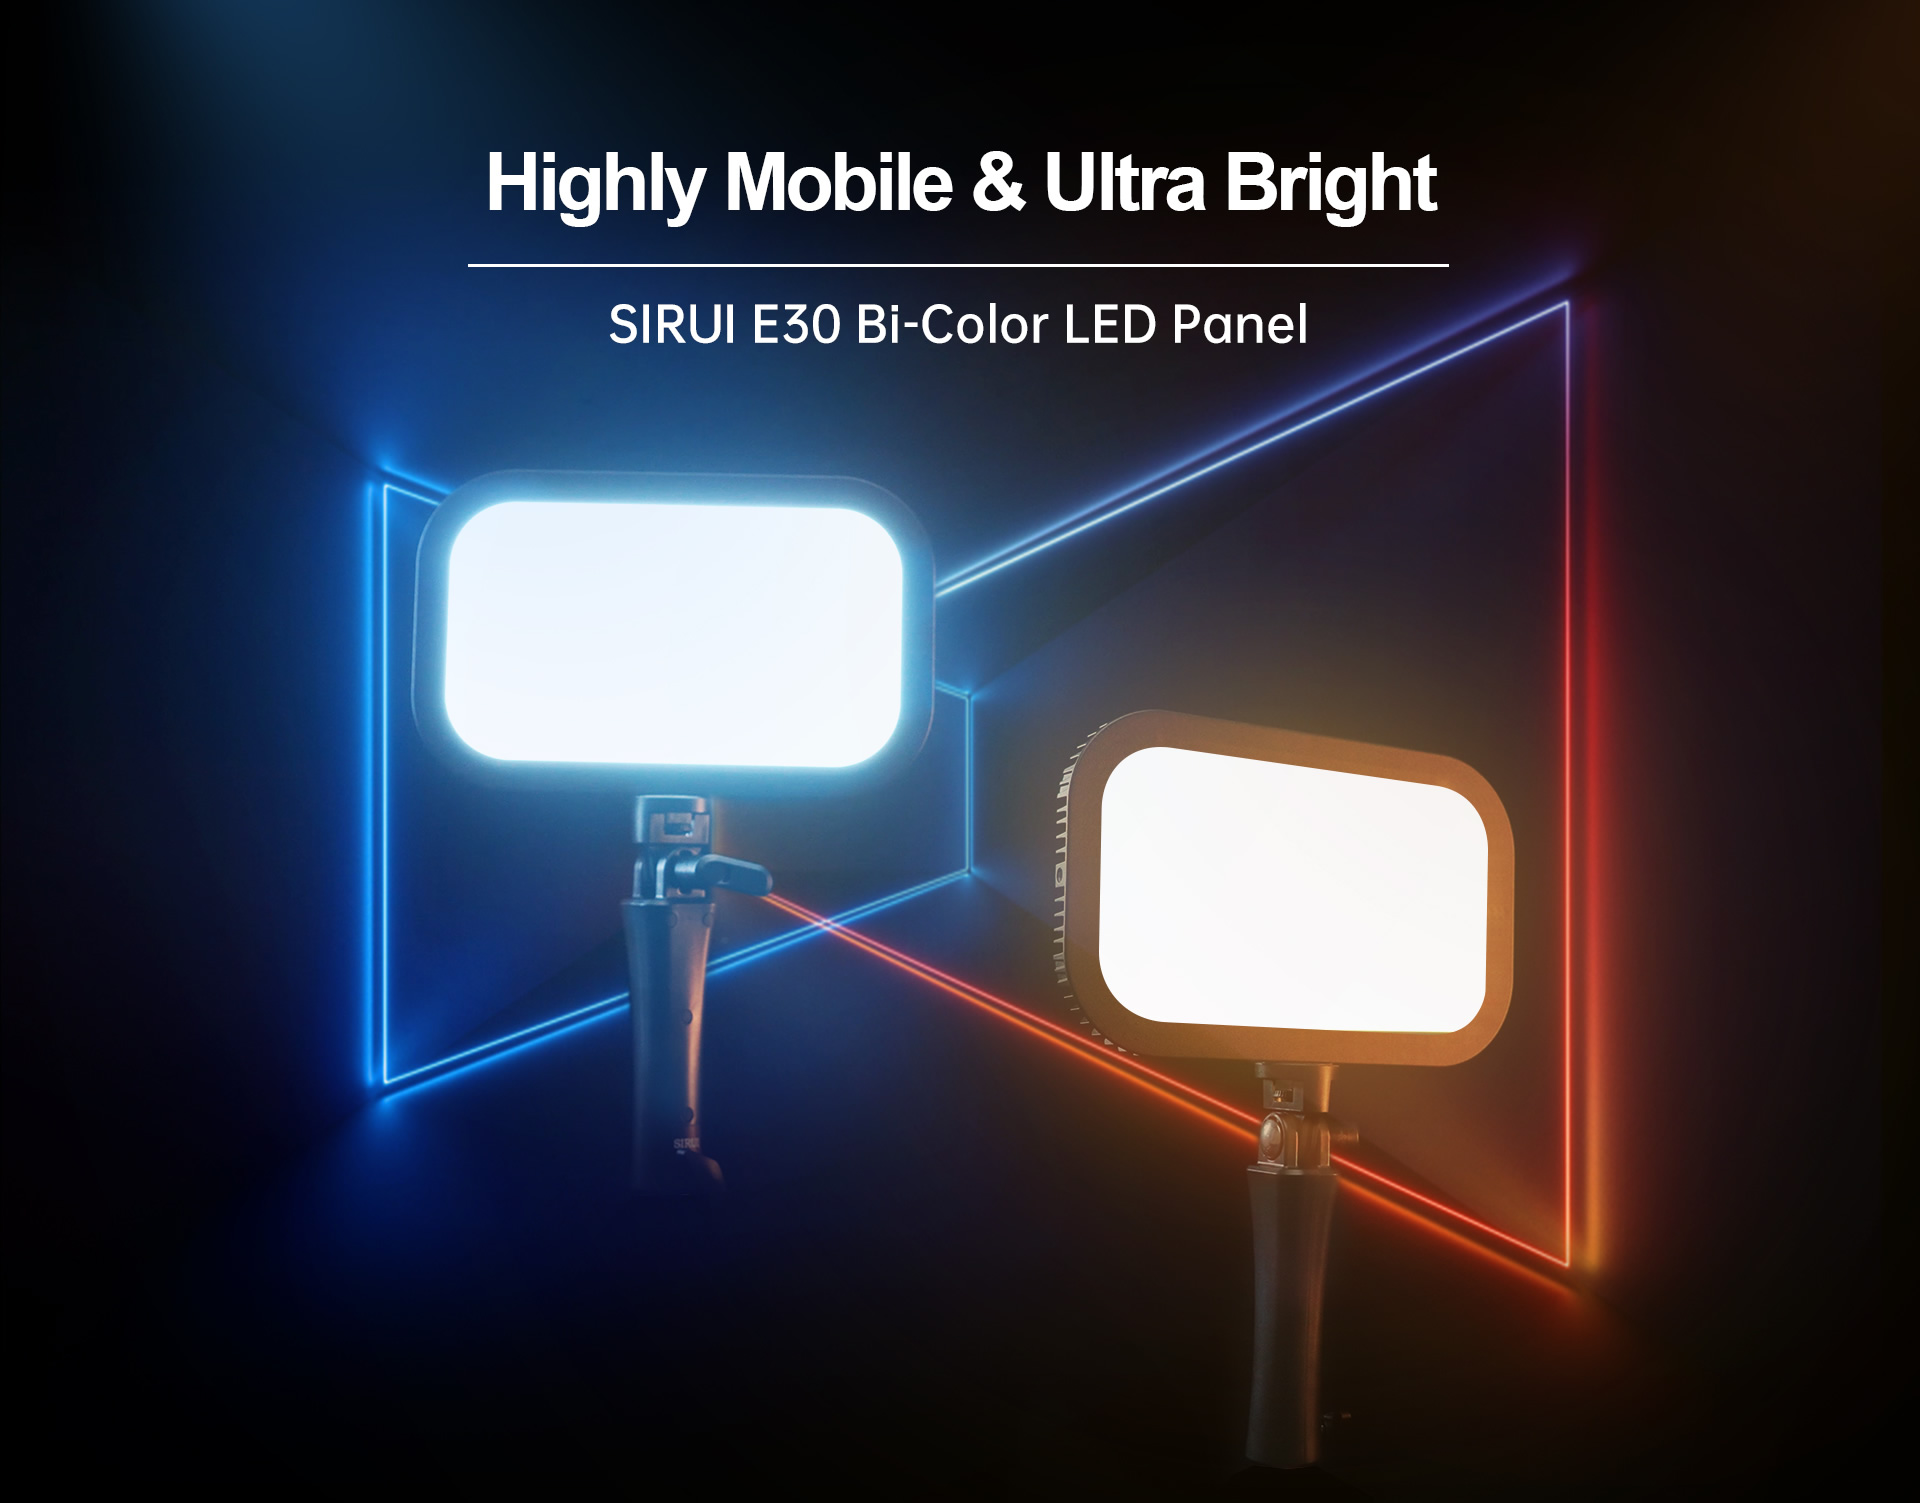 SIRUI E30 Bi-Color LED Panel